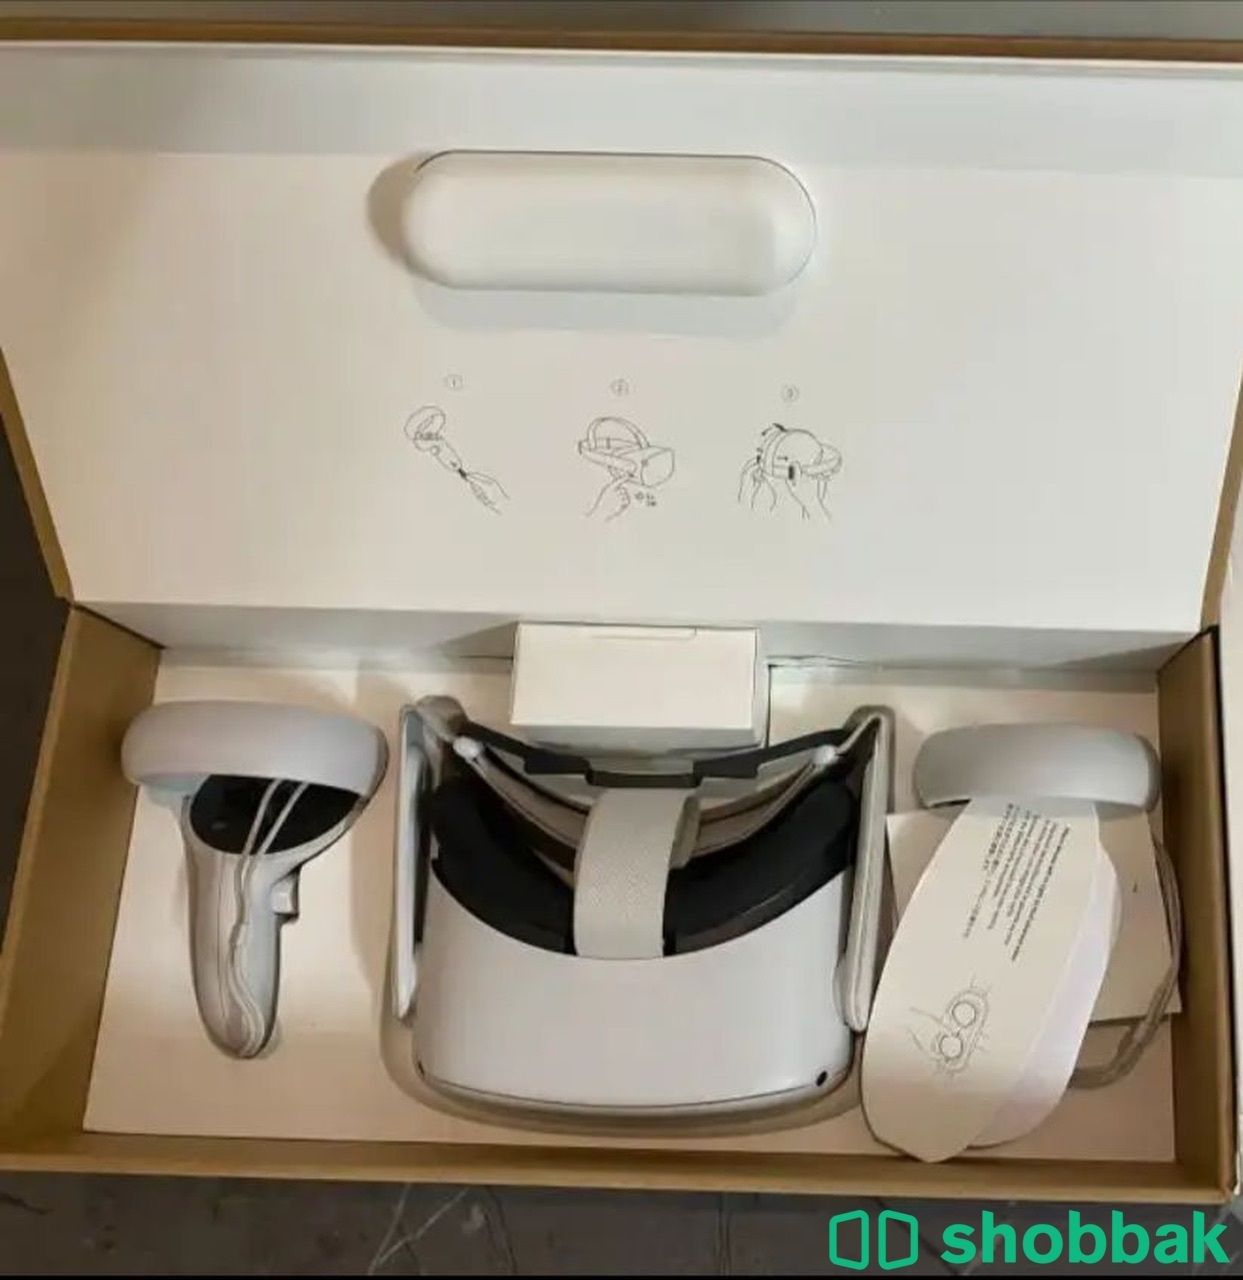 اوكيولس VR كويست 2 Quest حجم 128 GB Shobbak Saudi Arabia